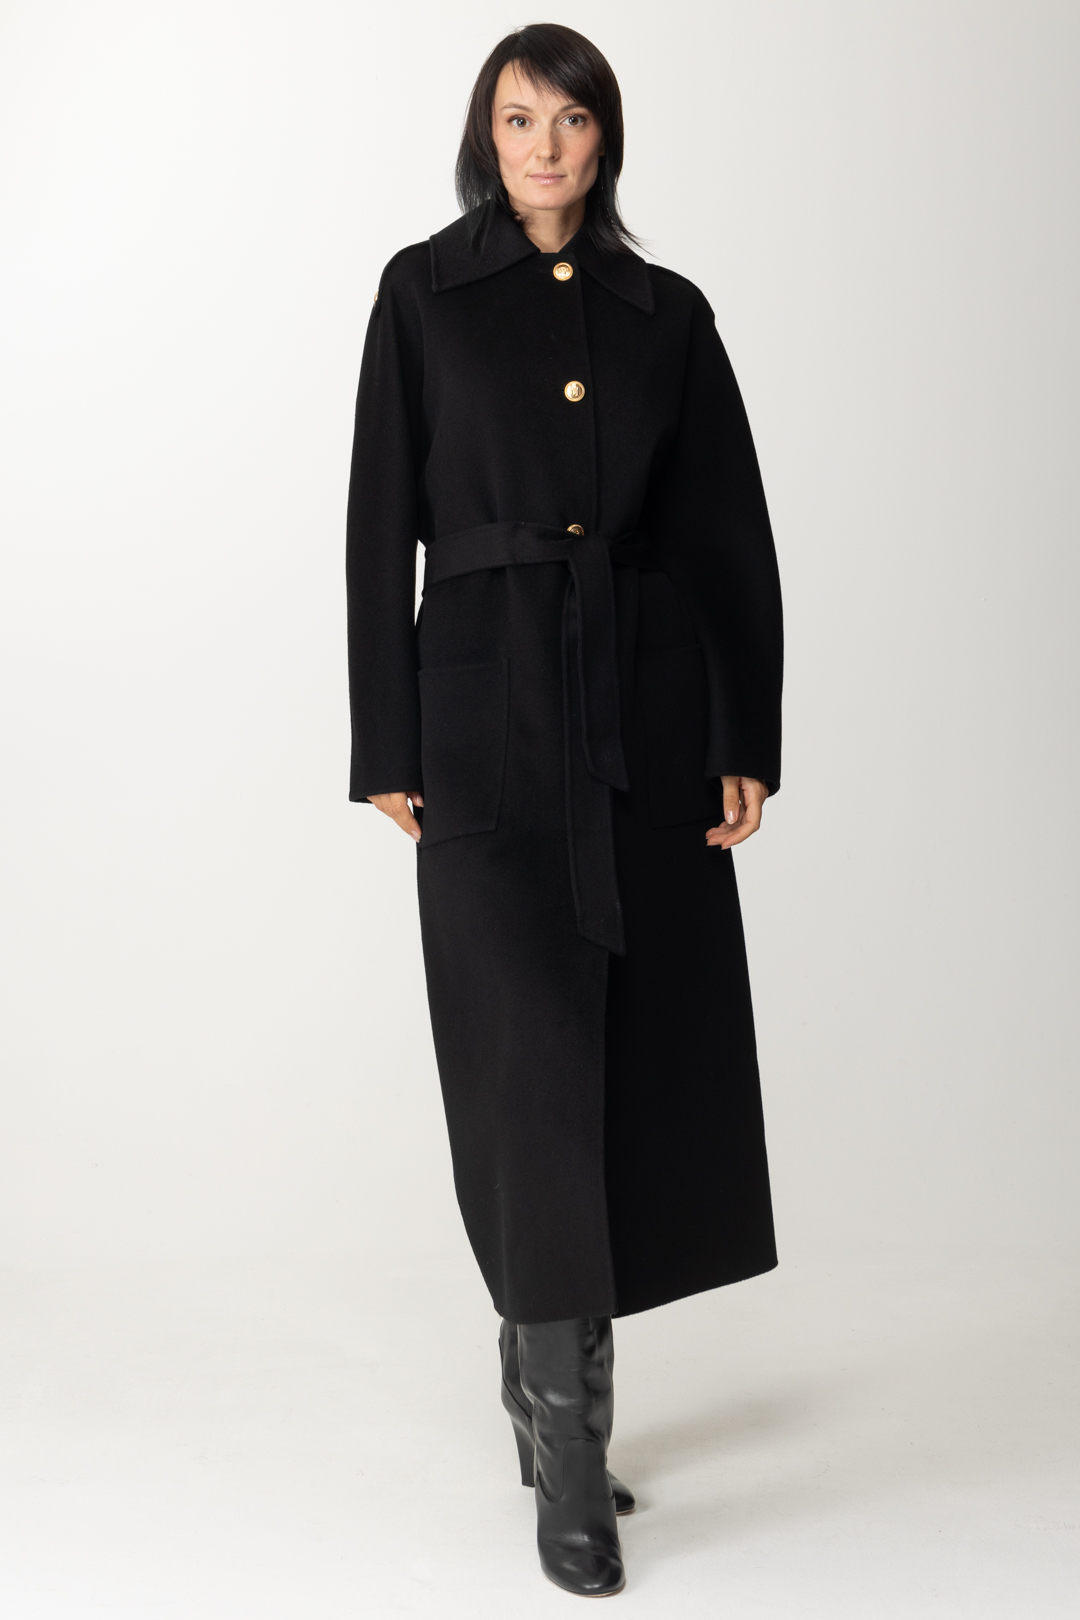 Vista previa: Elisabetta Franchi Abrigo de lana con cuello camisero Nero